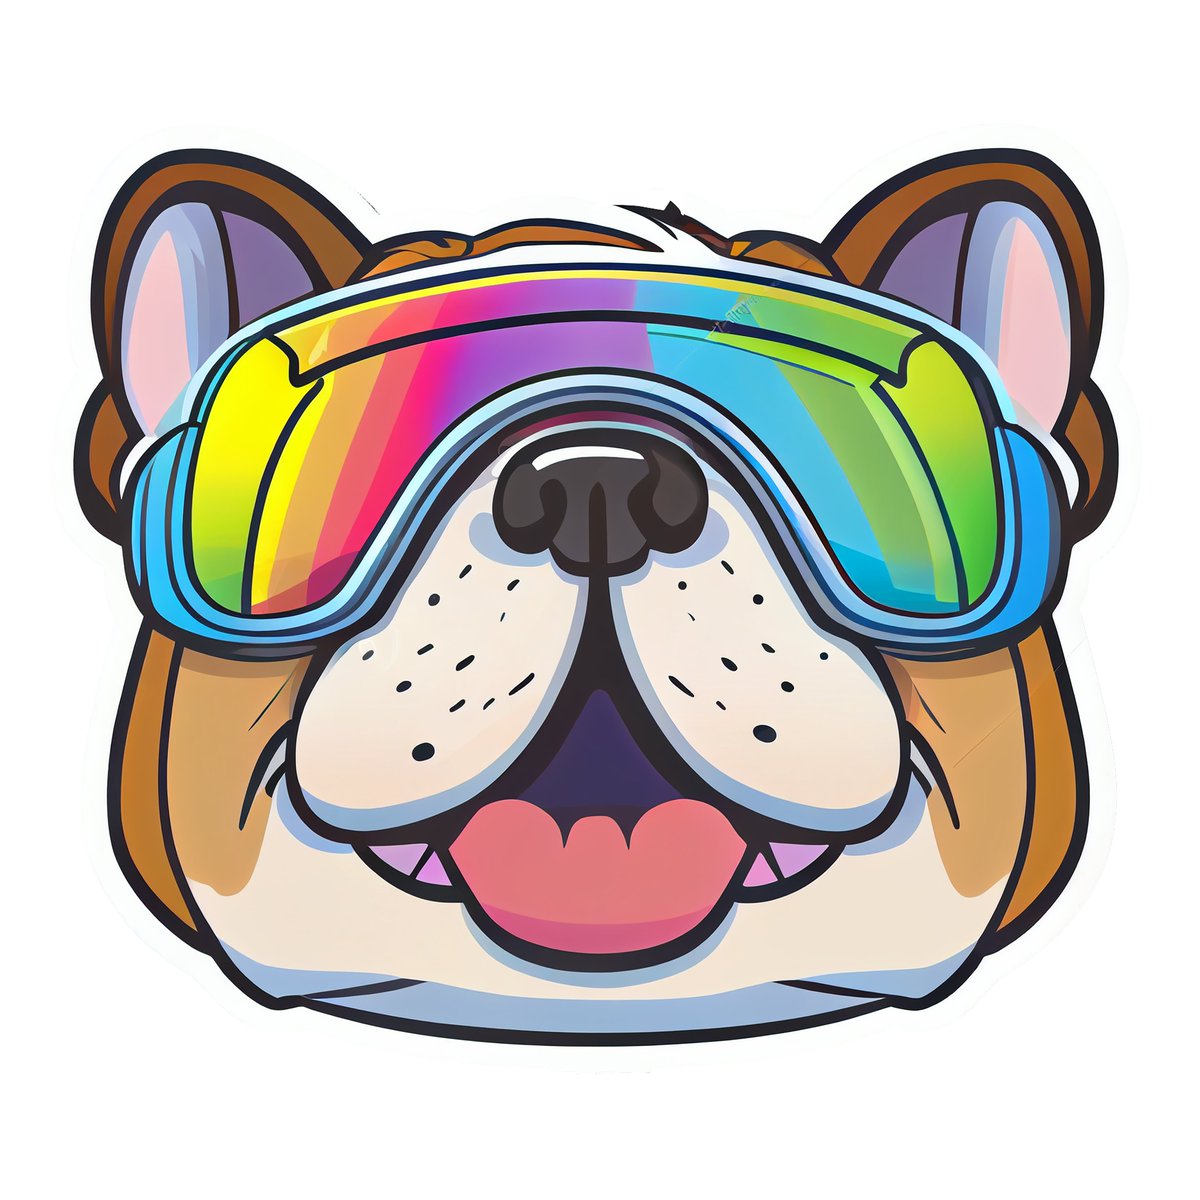 Kawaii Ecstatic Bulldog wearing Funky Goggles
#kawaii #cutedogs #dogfashion #goggles  #anime #dogfather #bulldog #cyberpunk #doggo #Pride #rainbow #mansbestfriend #dogfighting #17march   #gamerlife #synthwave #psychedelic #mushroom